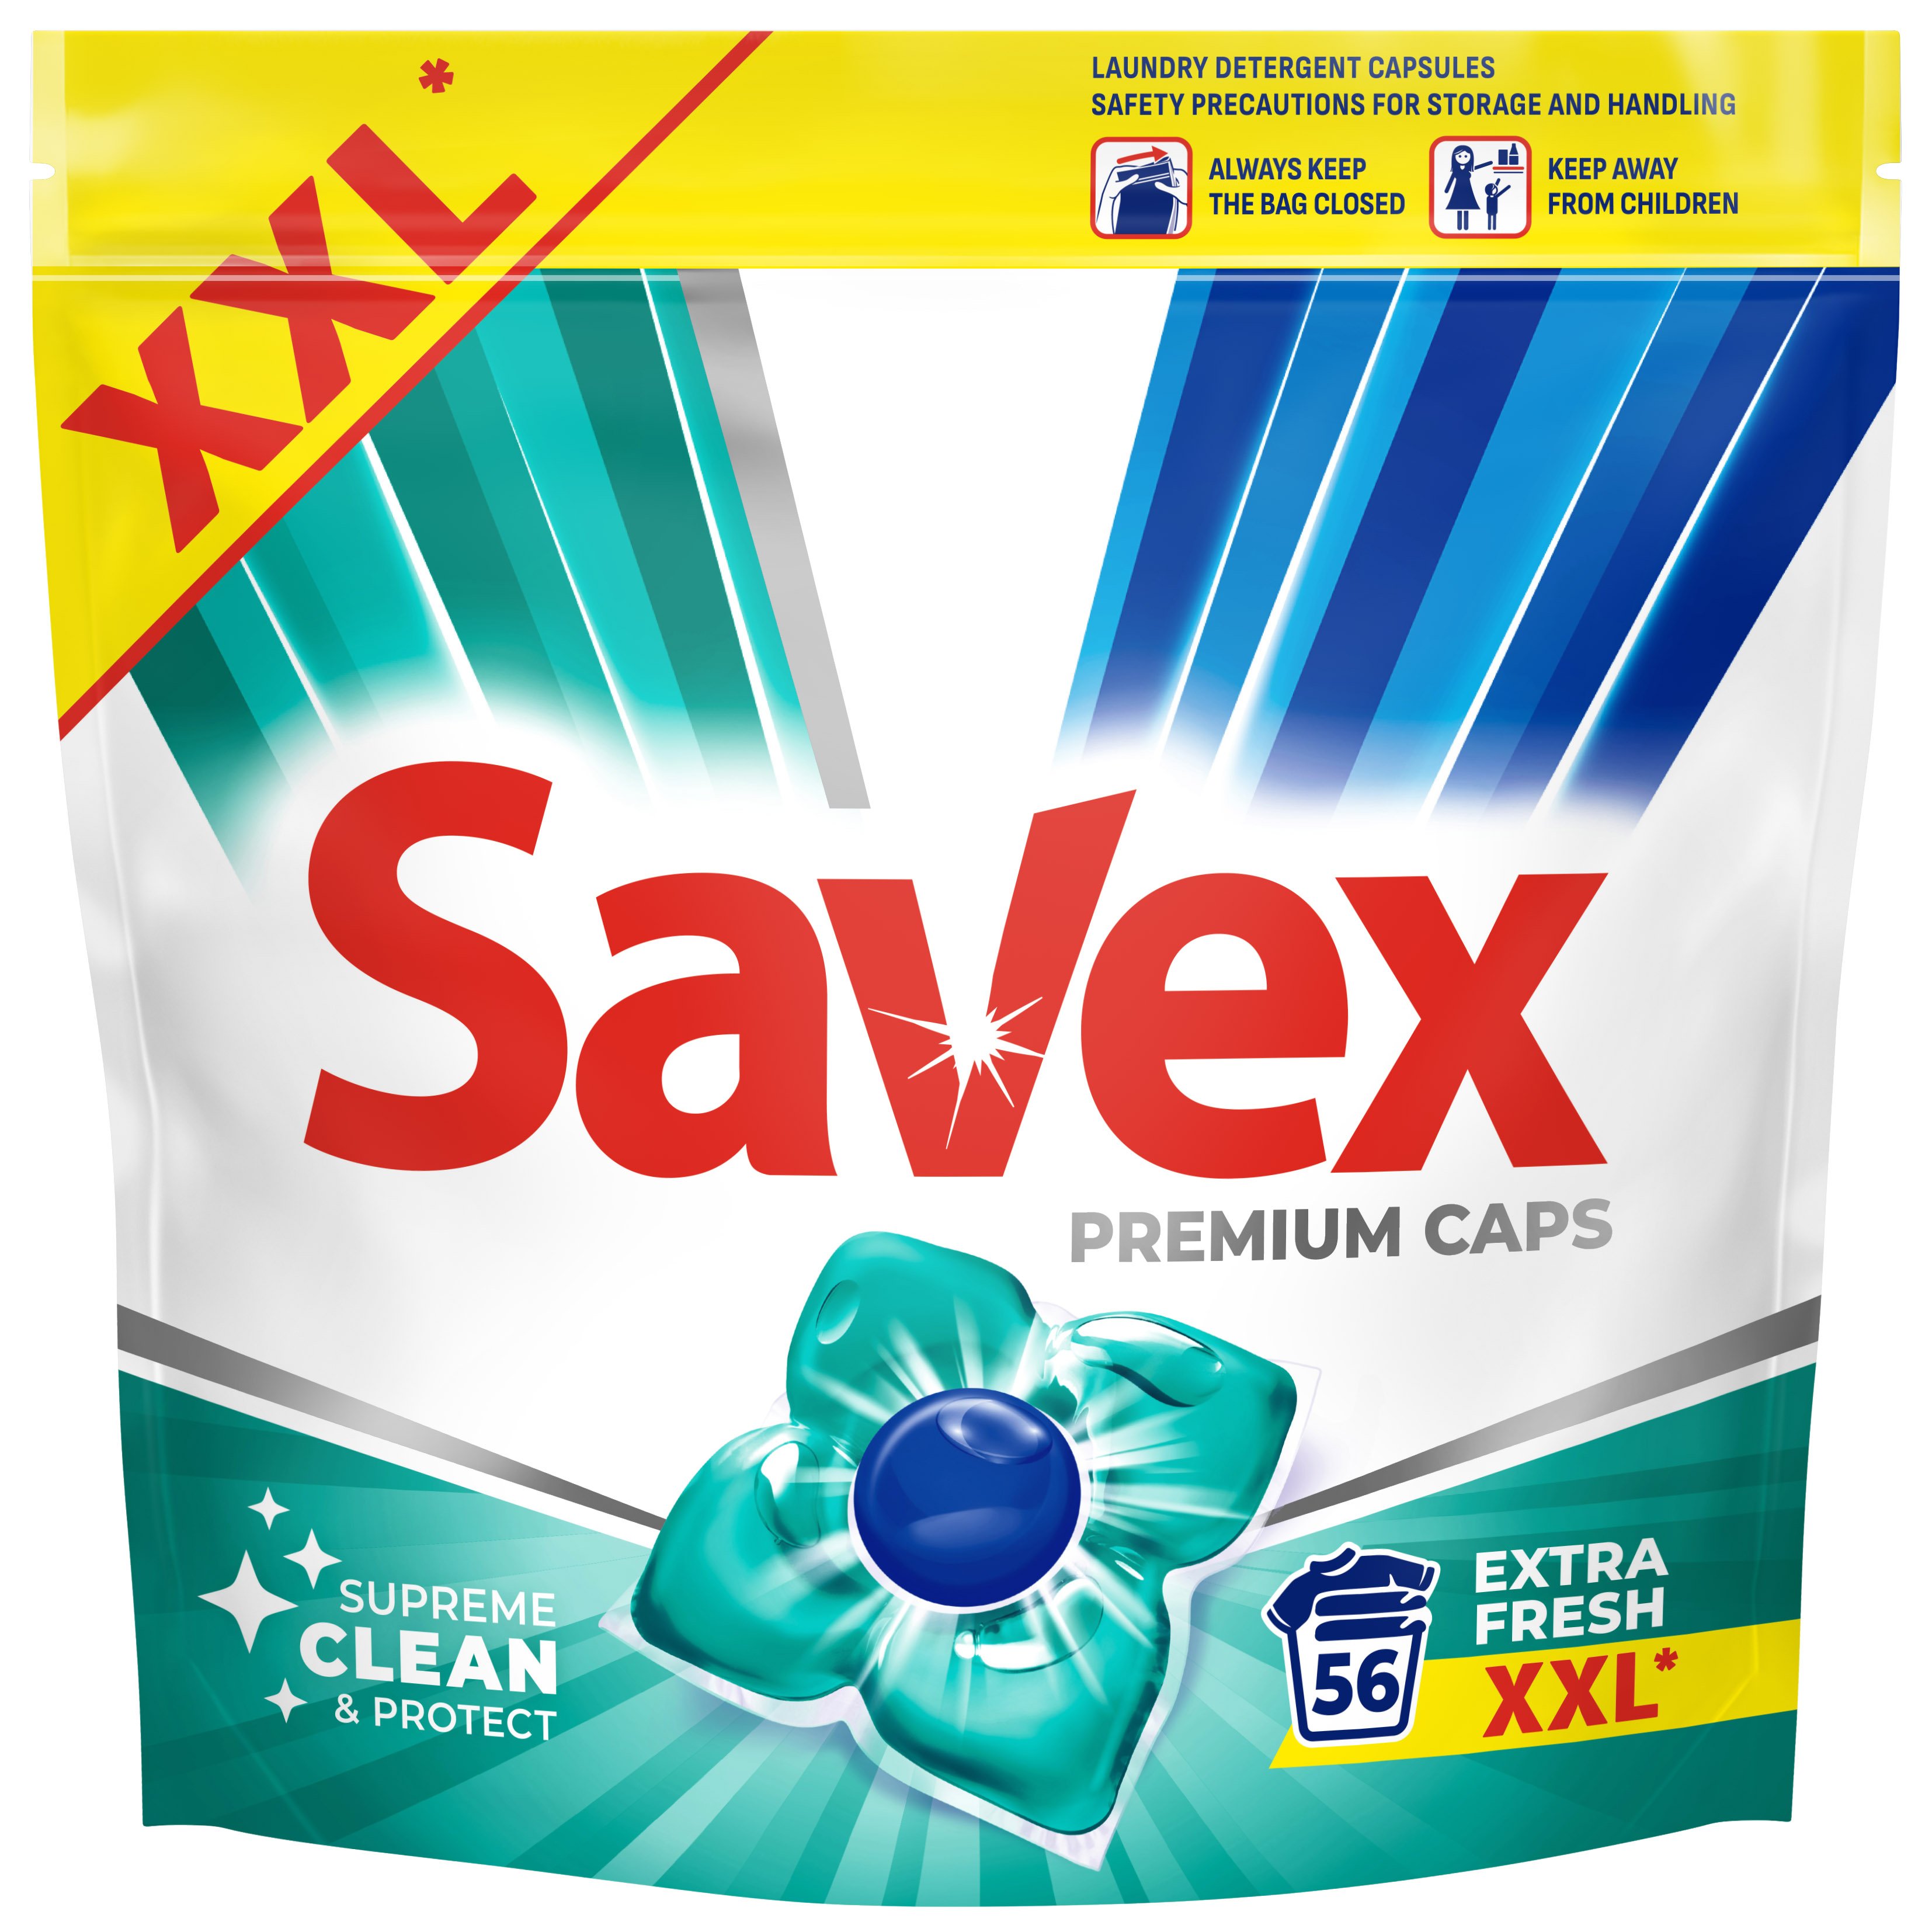 Капсулы для стирки Savex Premium Caps Extra Fresh 56 шт. - фото 1